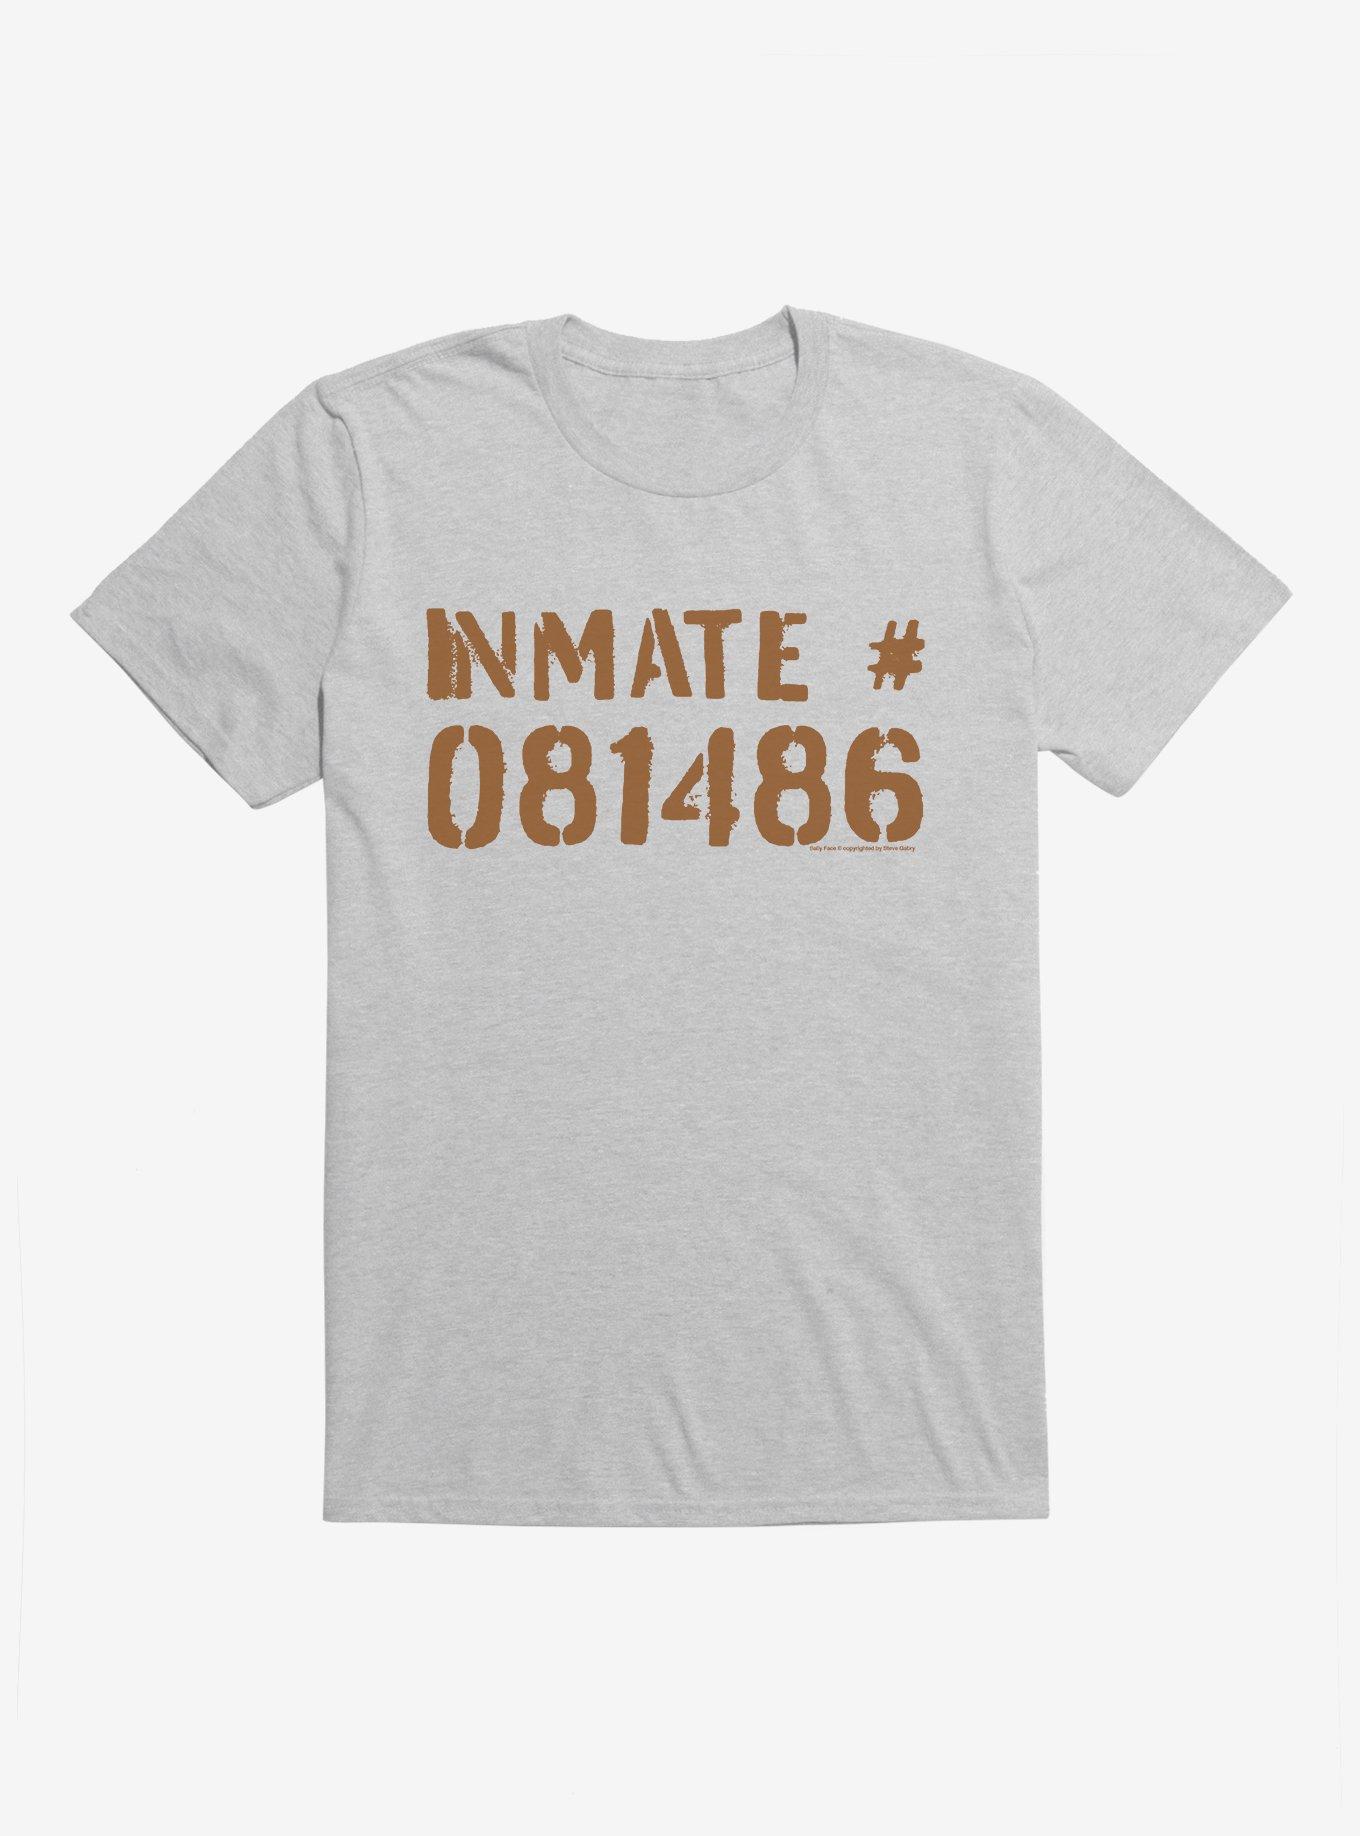 Sally Face Inmate 081486 T-Shirt, HEATHER GREY, hi-res